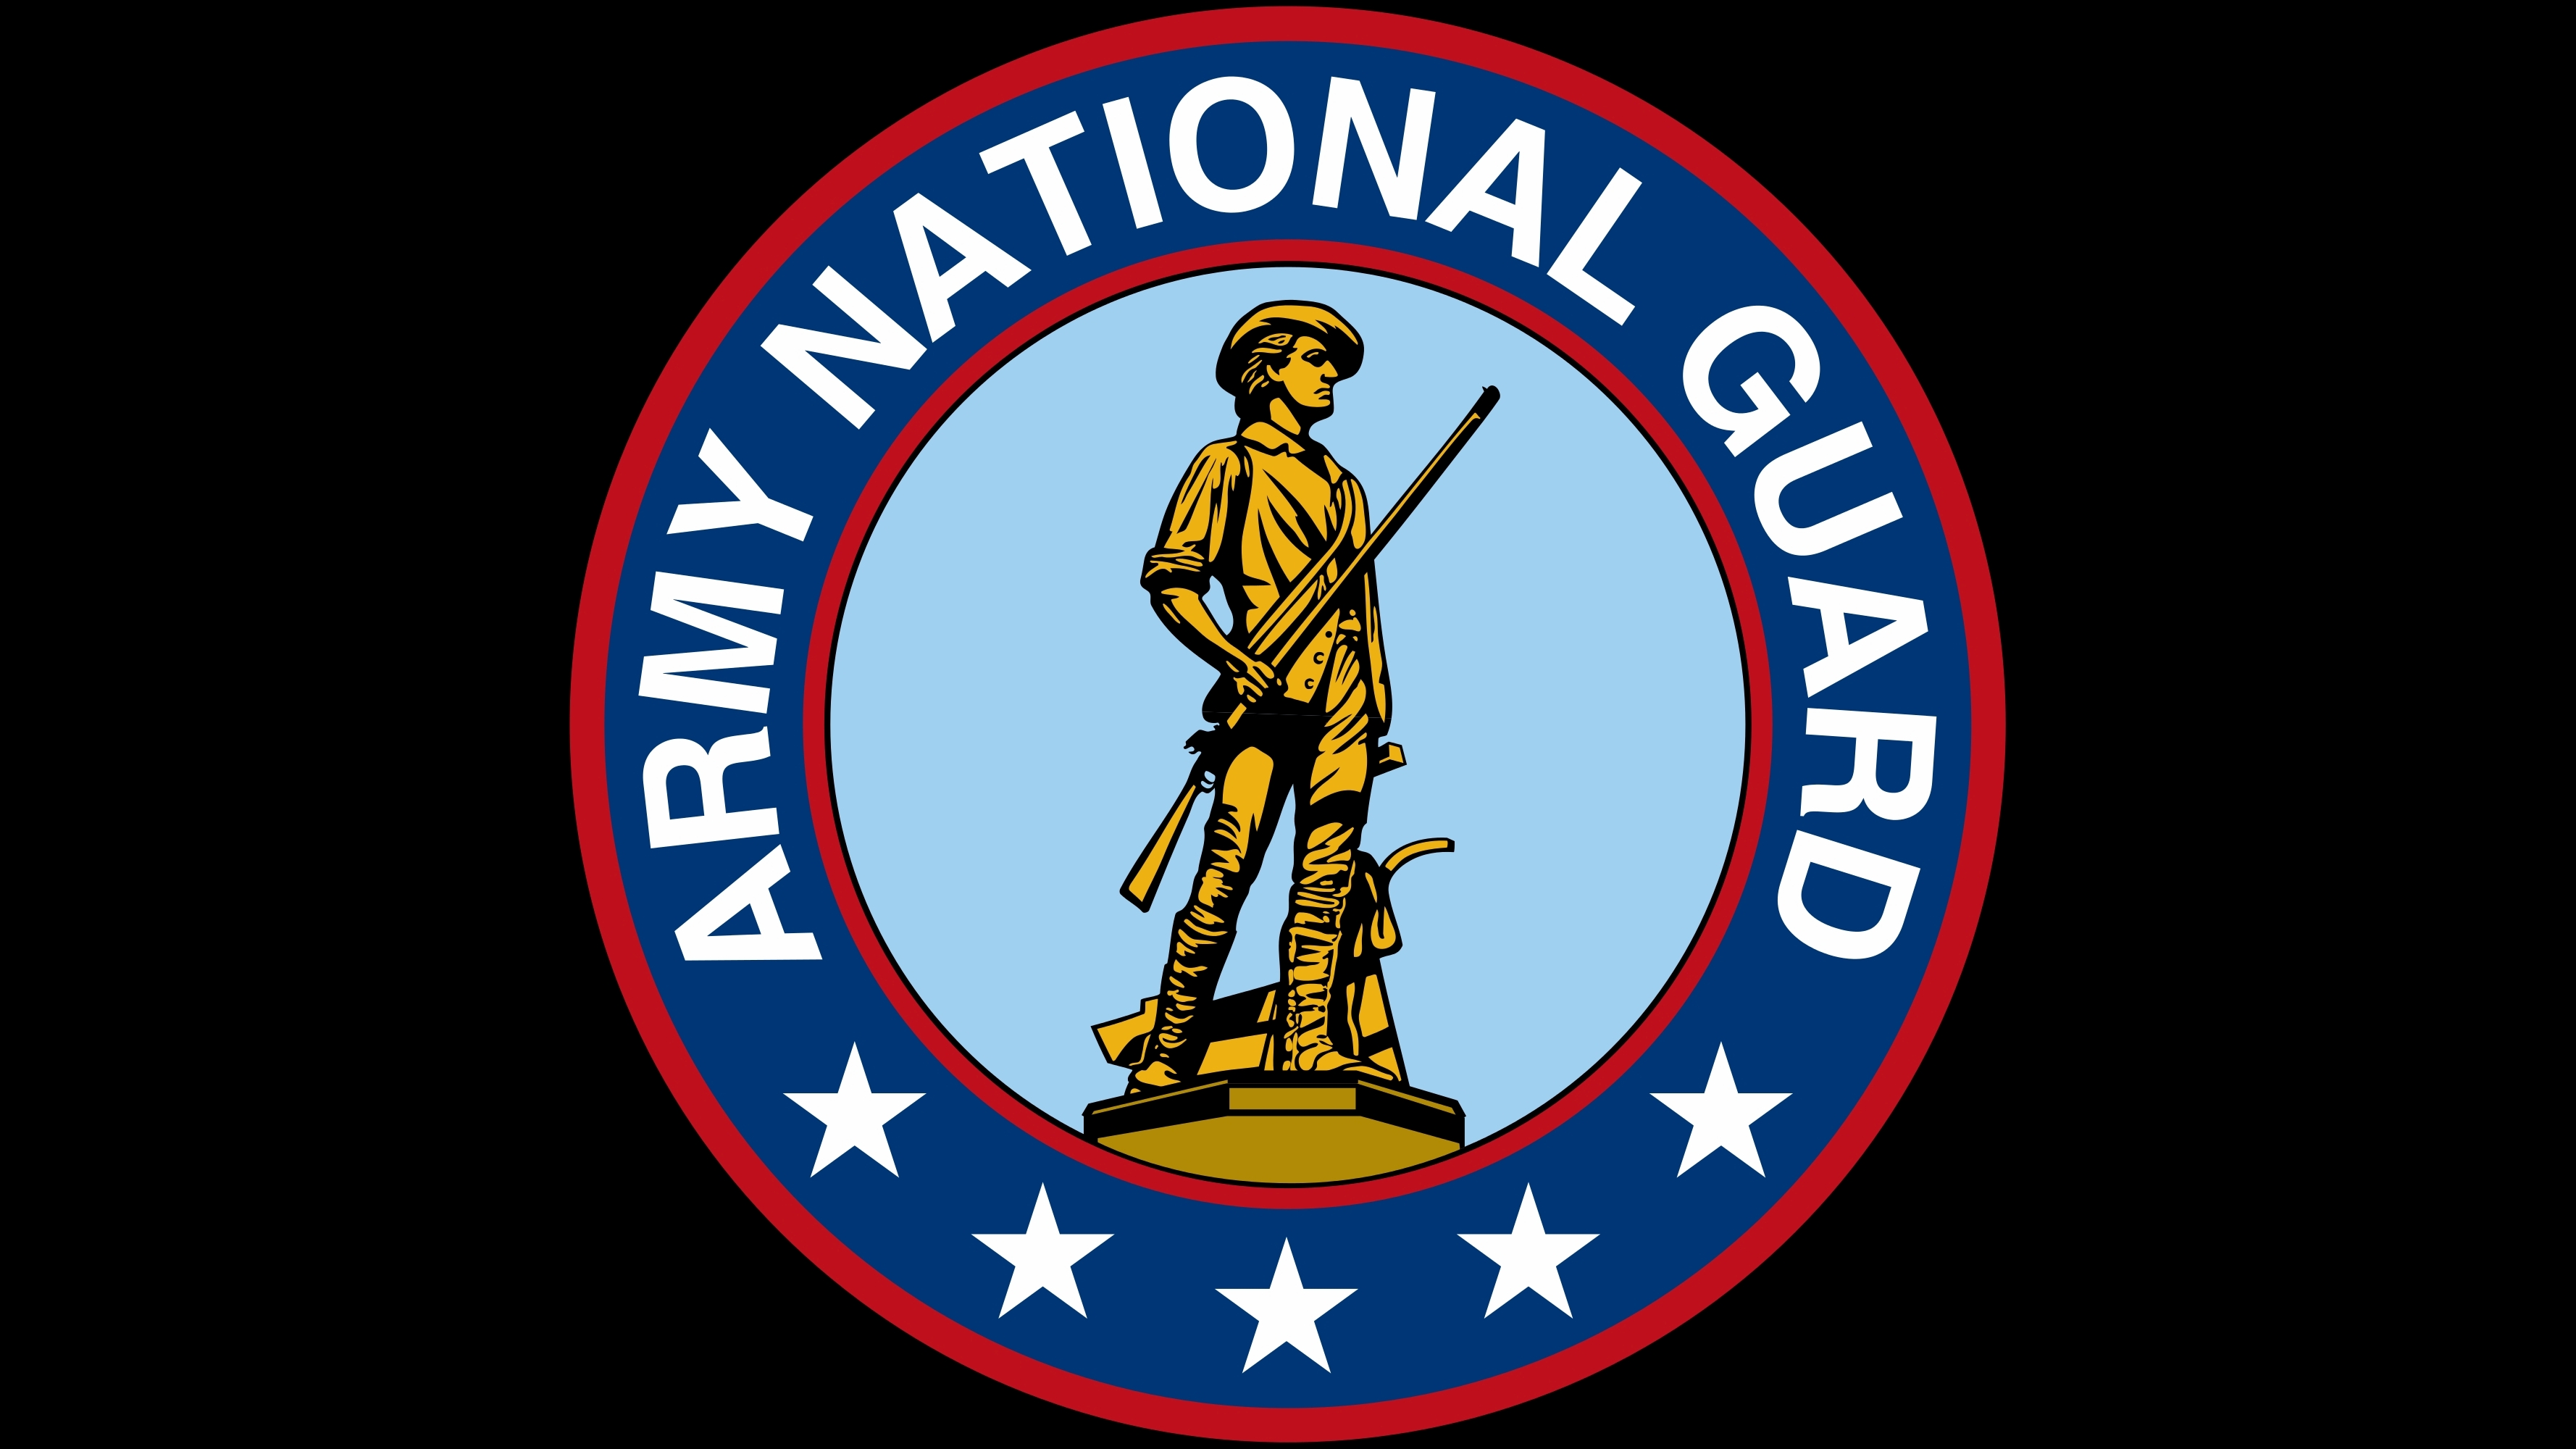 National Guard Puter Wallpaper Desktop Background